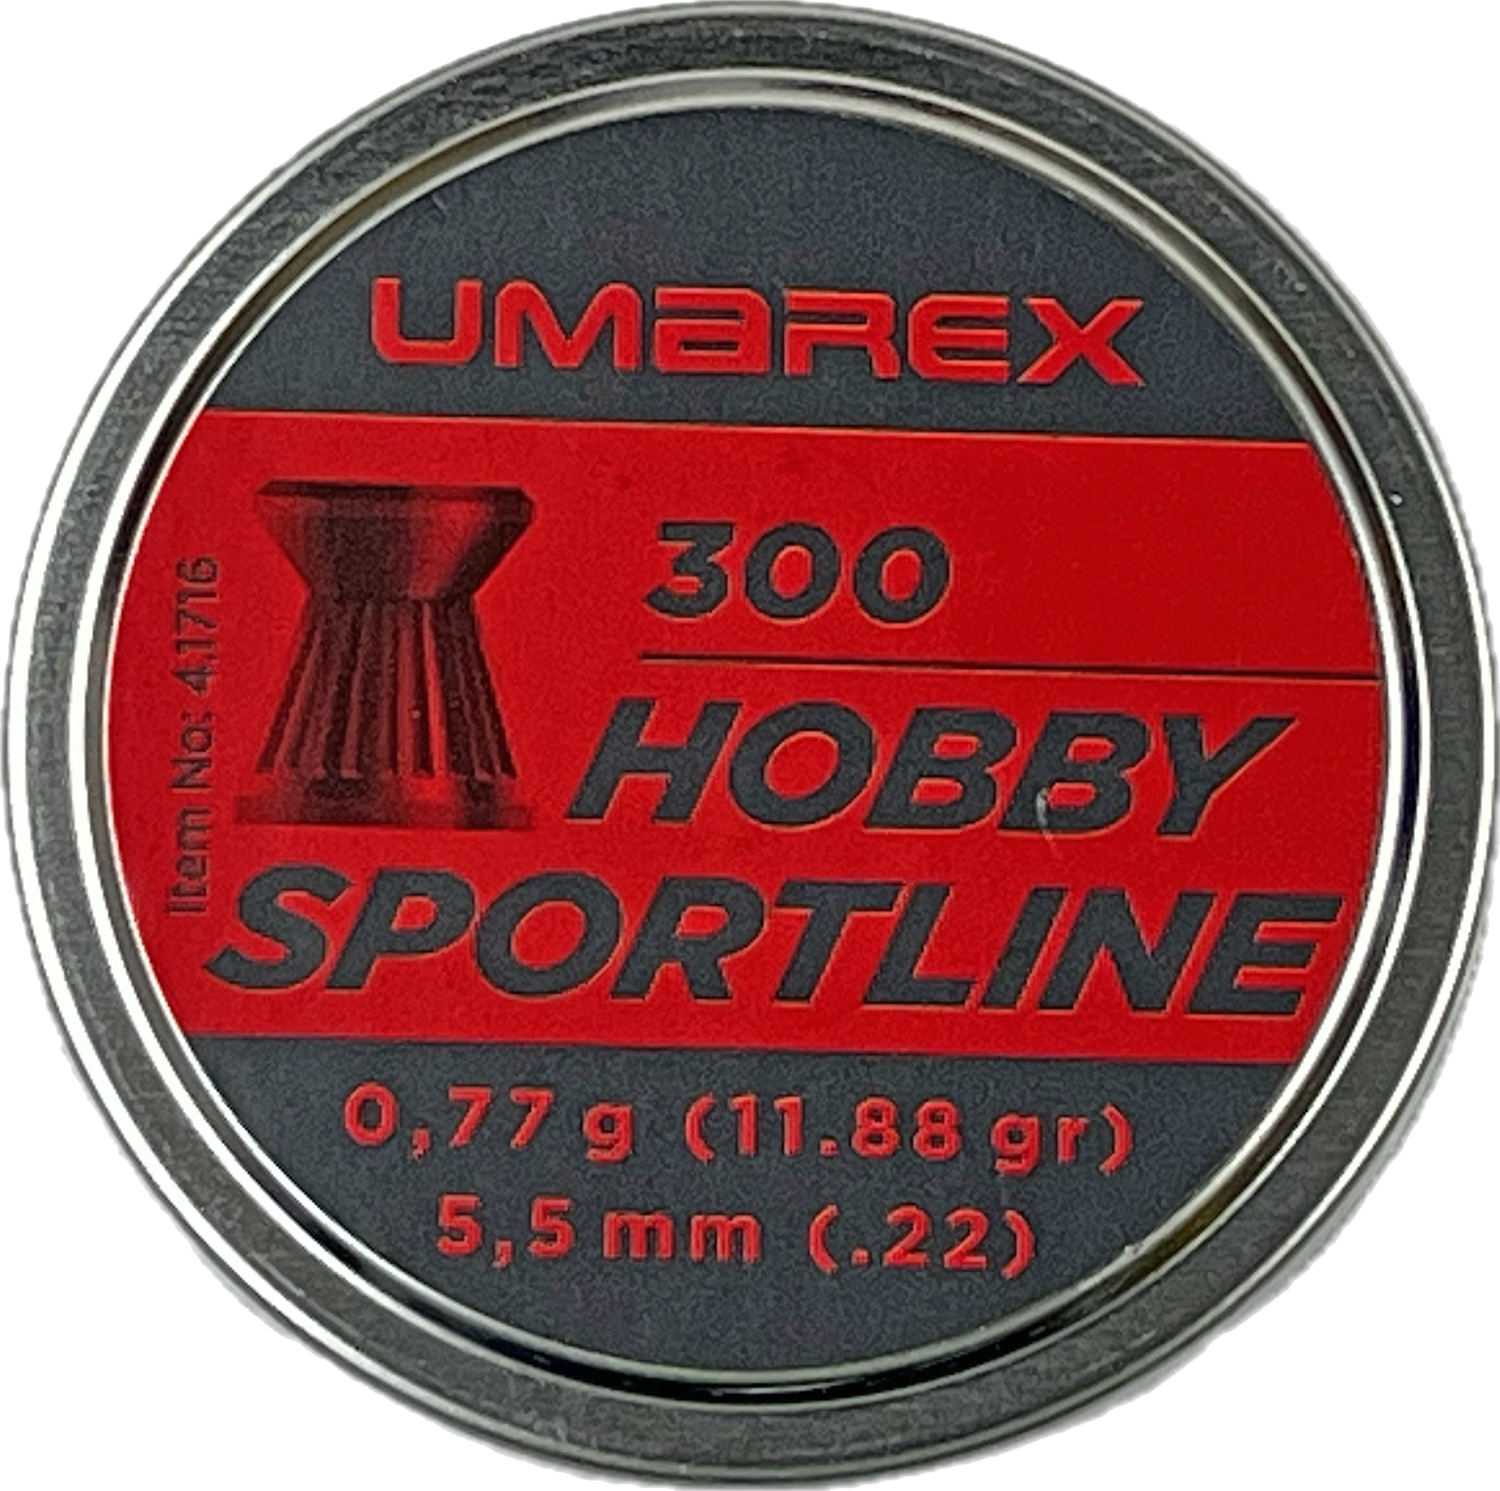 204337_umarex-hobby-sportline-5,5mm-0,77g_1